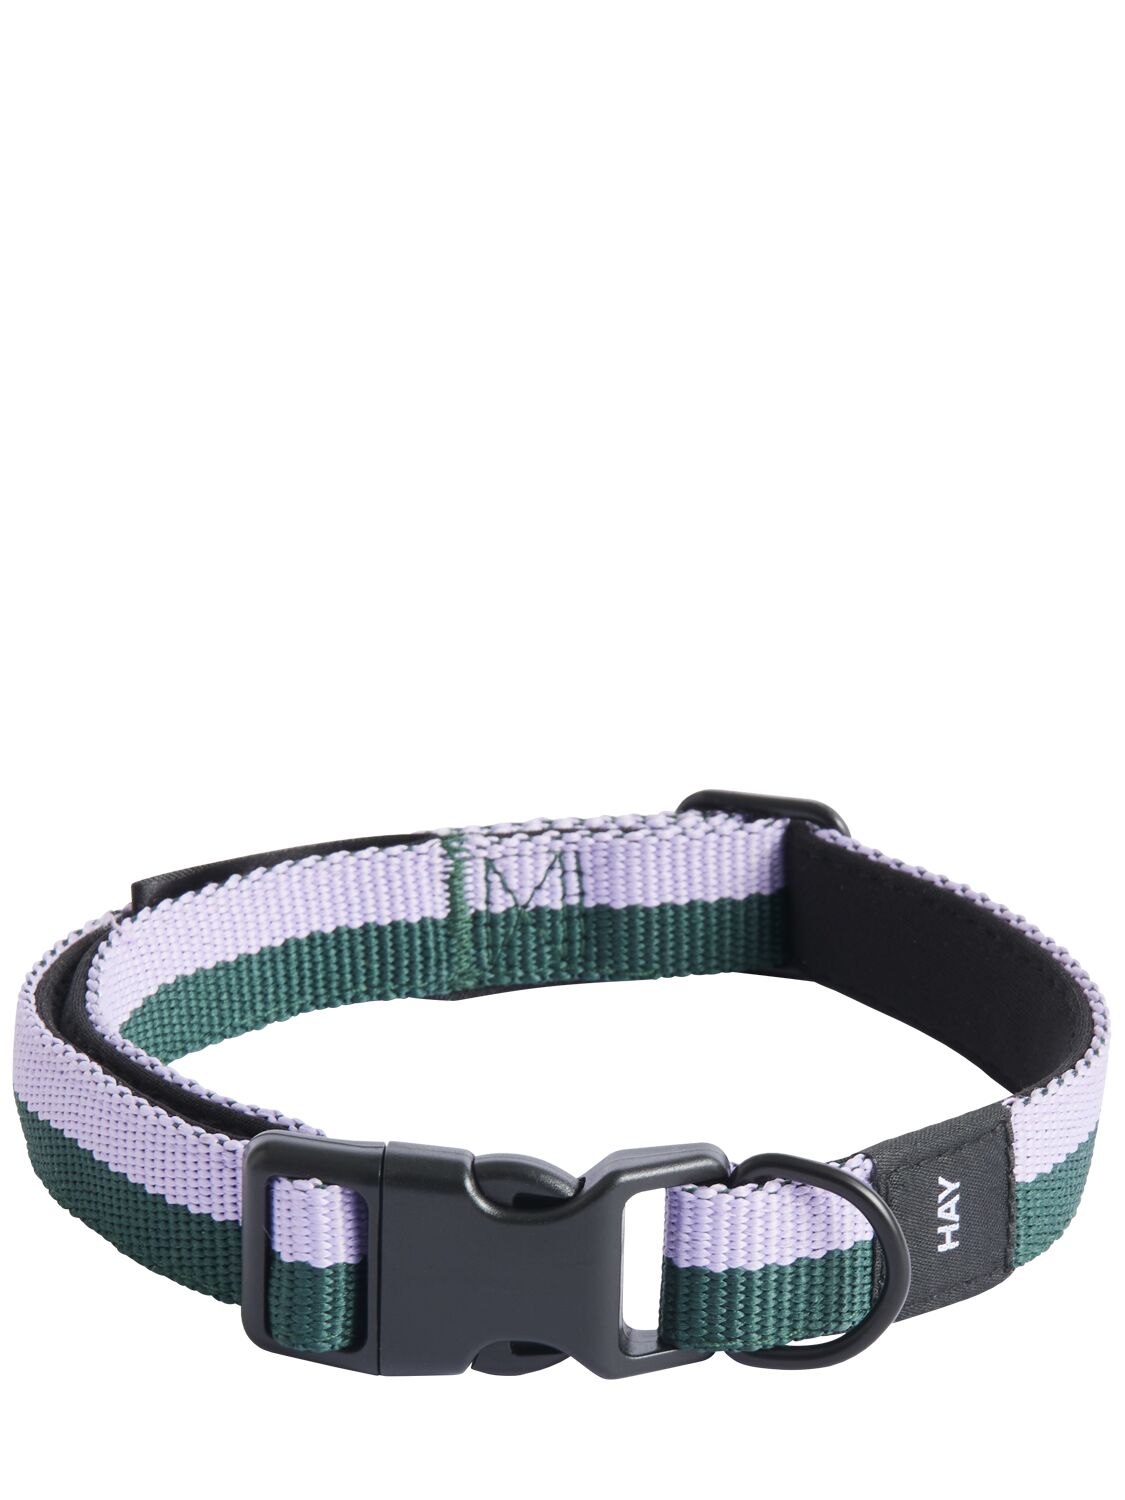 Hay S/m Flat Dog Collar In Multicolor